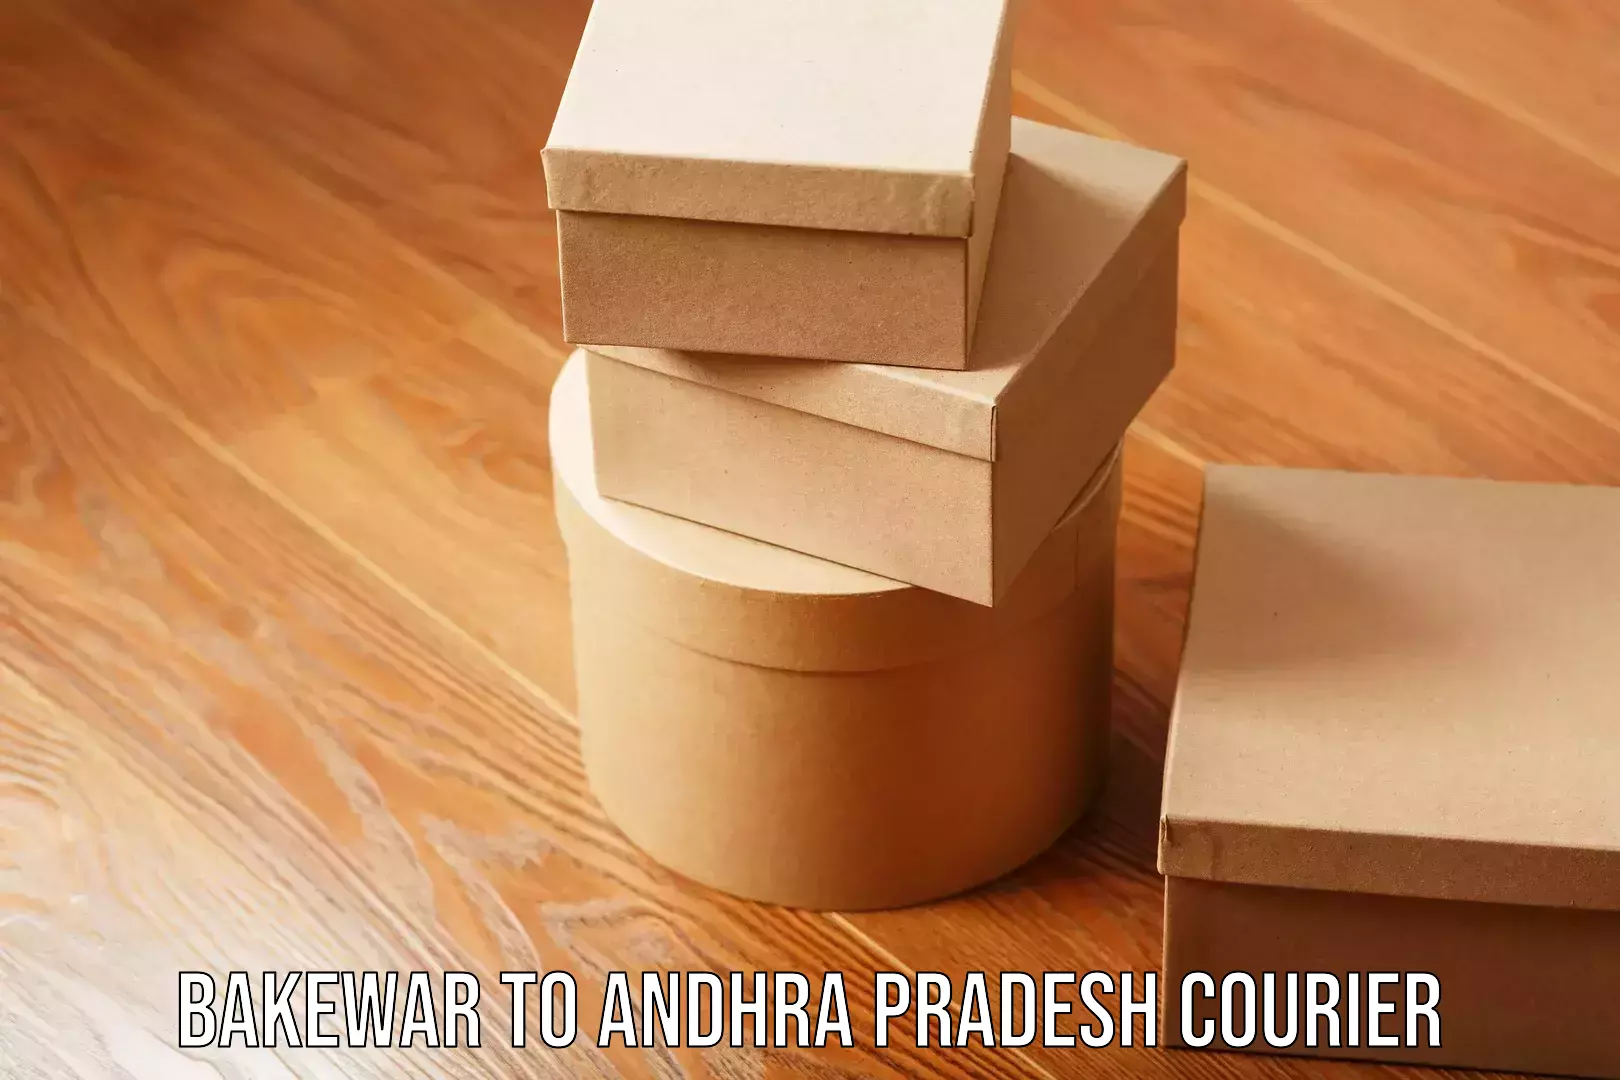 Courier service booking Bakewar to Andhra Pradesh